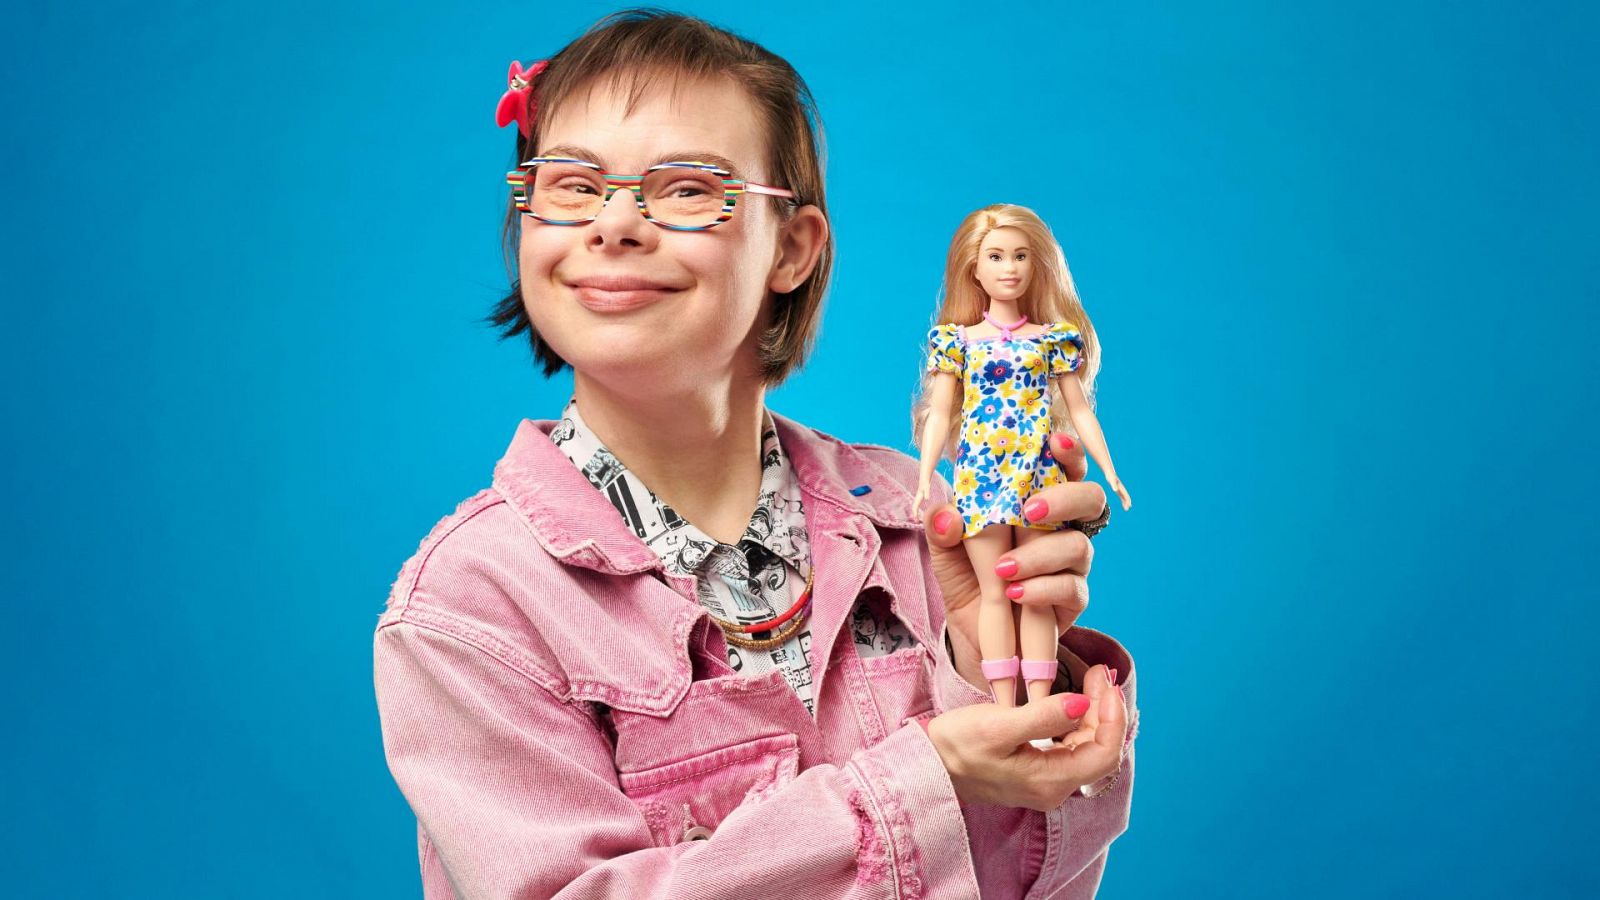 Barbie lanza una muñeca con Síndrome de Down